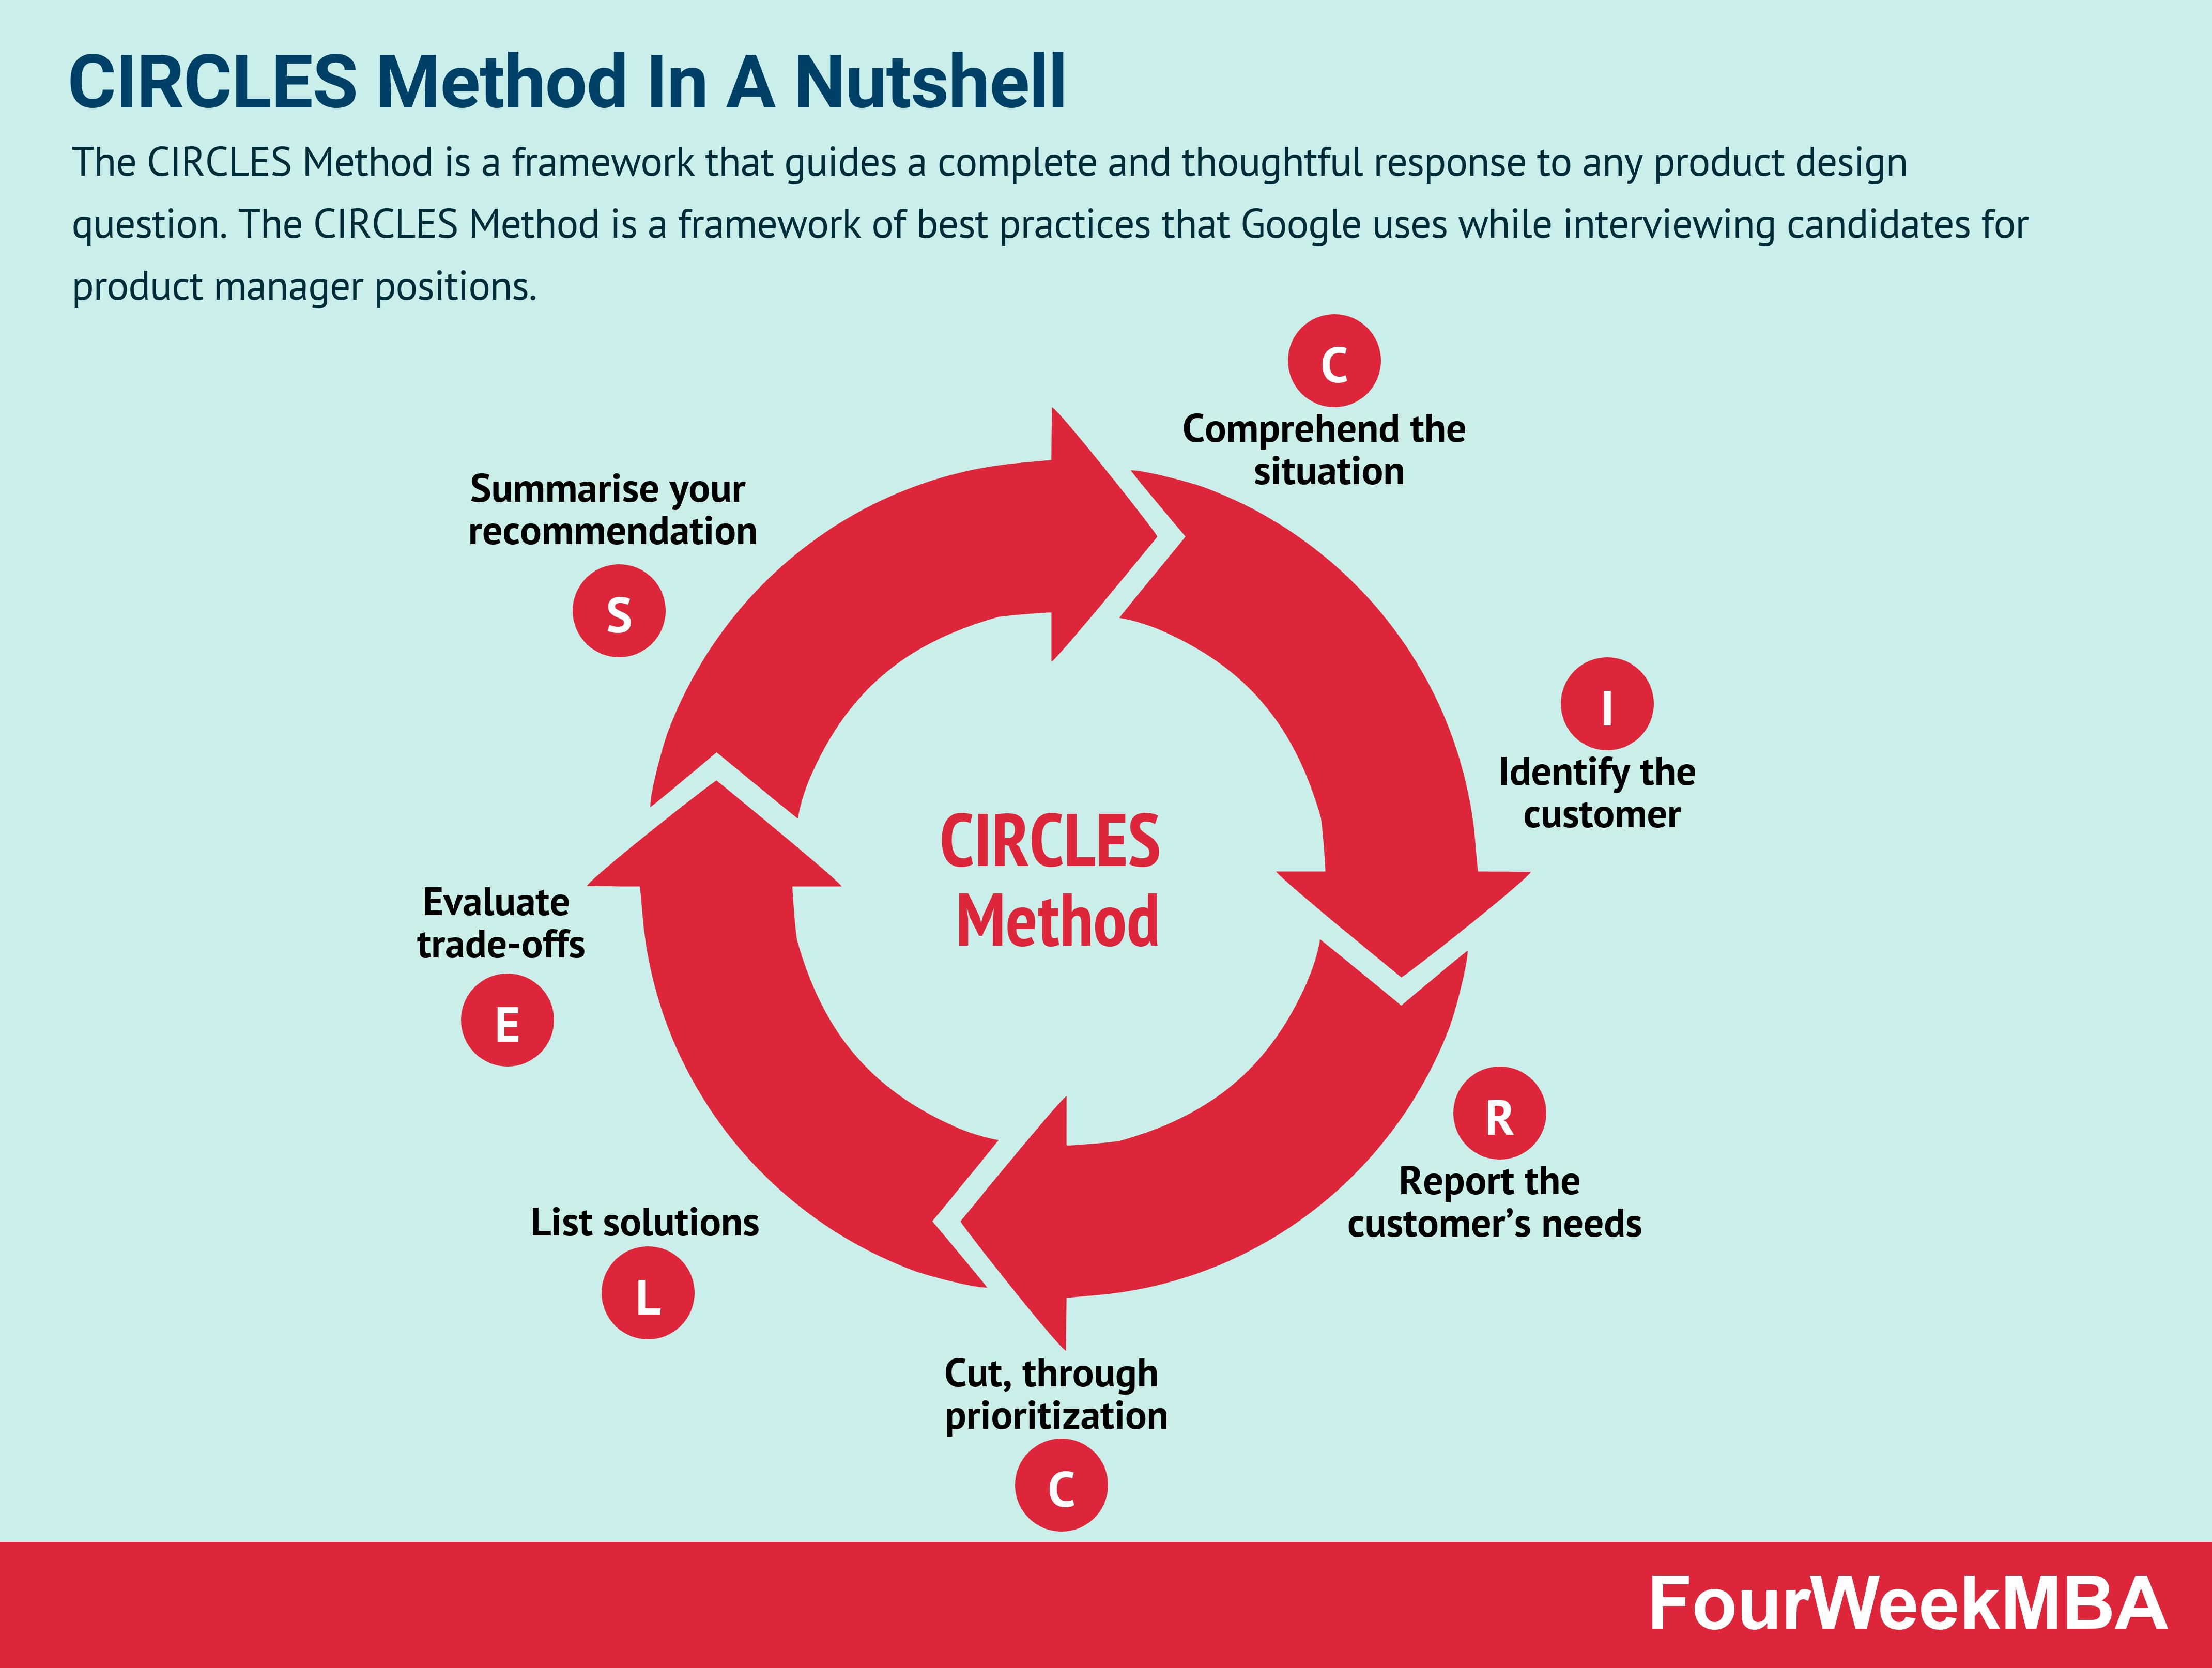 Circles Method in a Nutshell